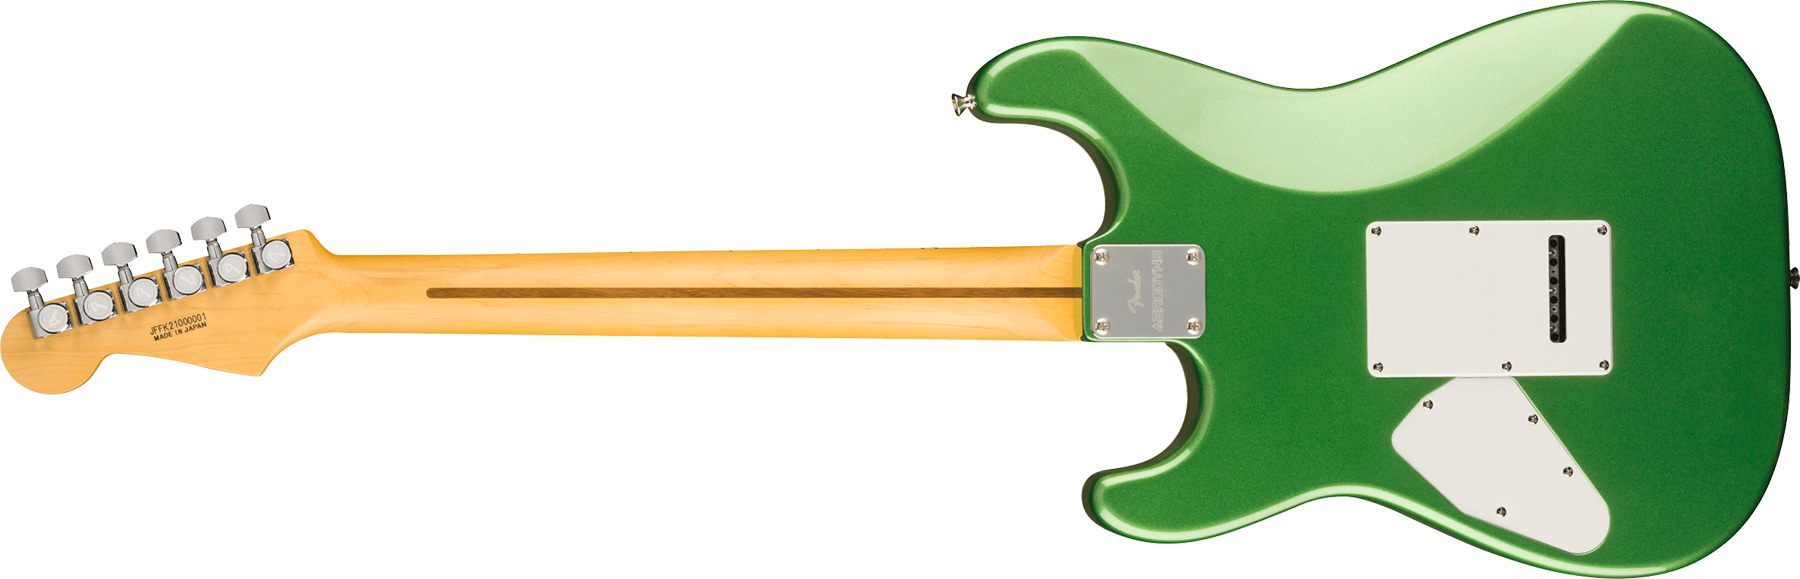 Fender Strat Aerodyne Special Jap Trem Hss Mn - Speed Green Metallic - Guitarra eléctrica con forma de str. - Variation 1